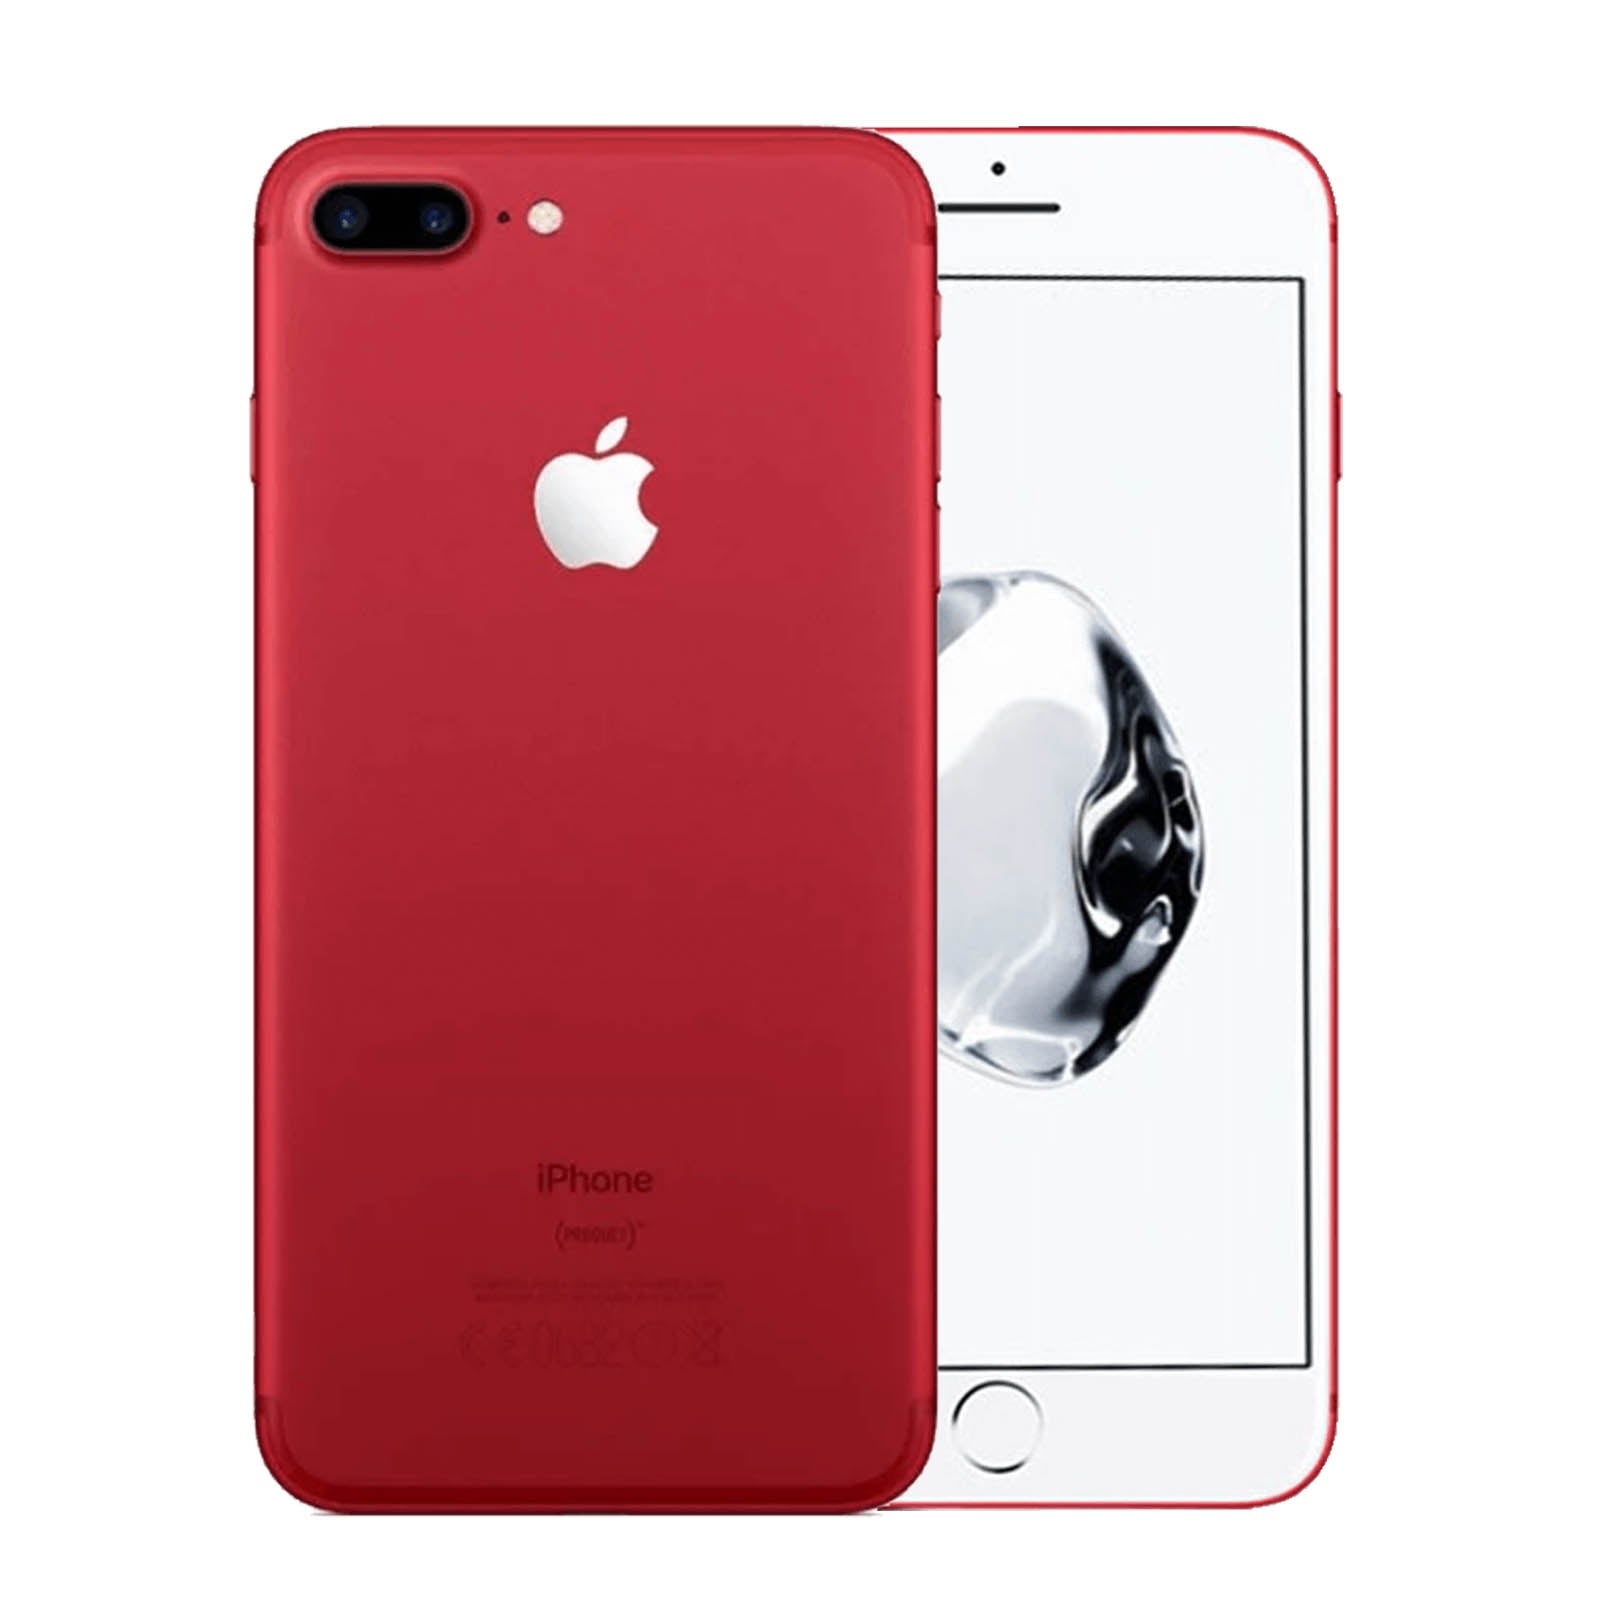 Apple iPhone 7 Plus 128GB Rosso Buono Sbloccato